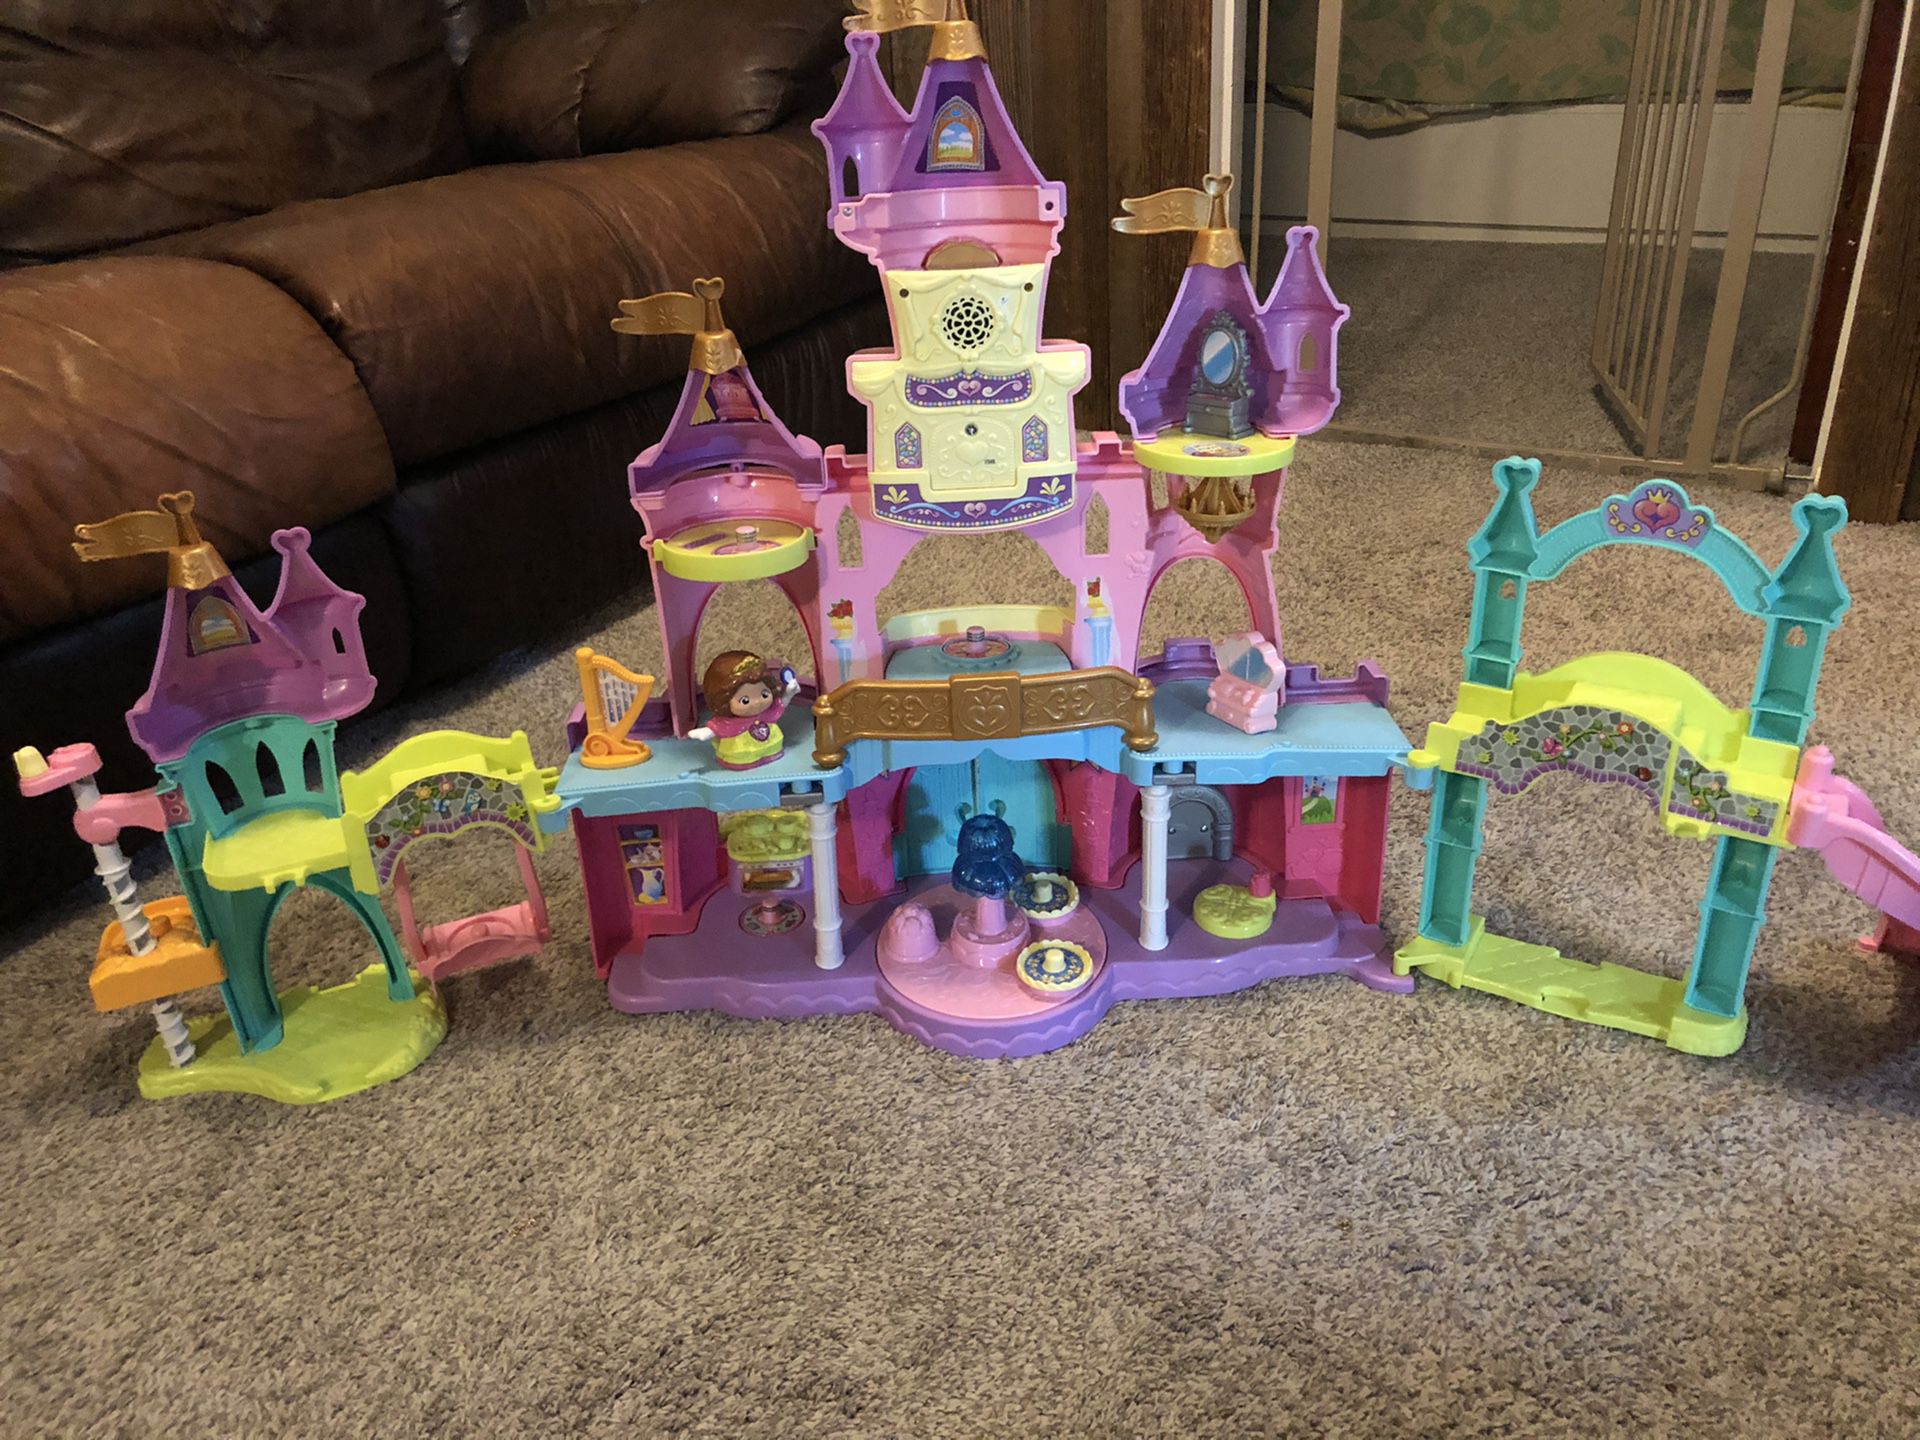 Kids princess toy / play castle